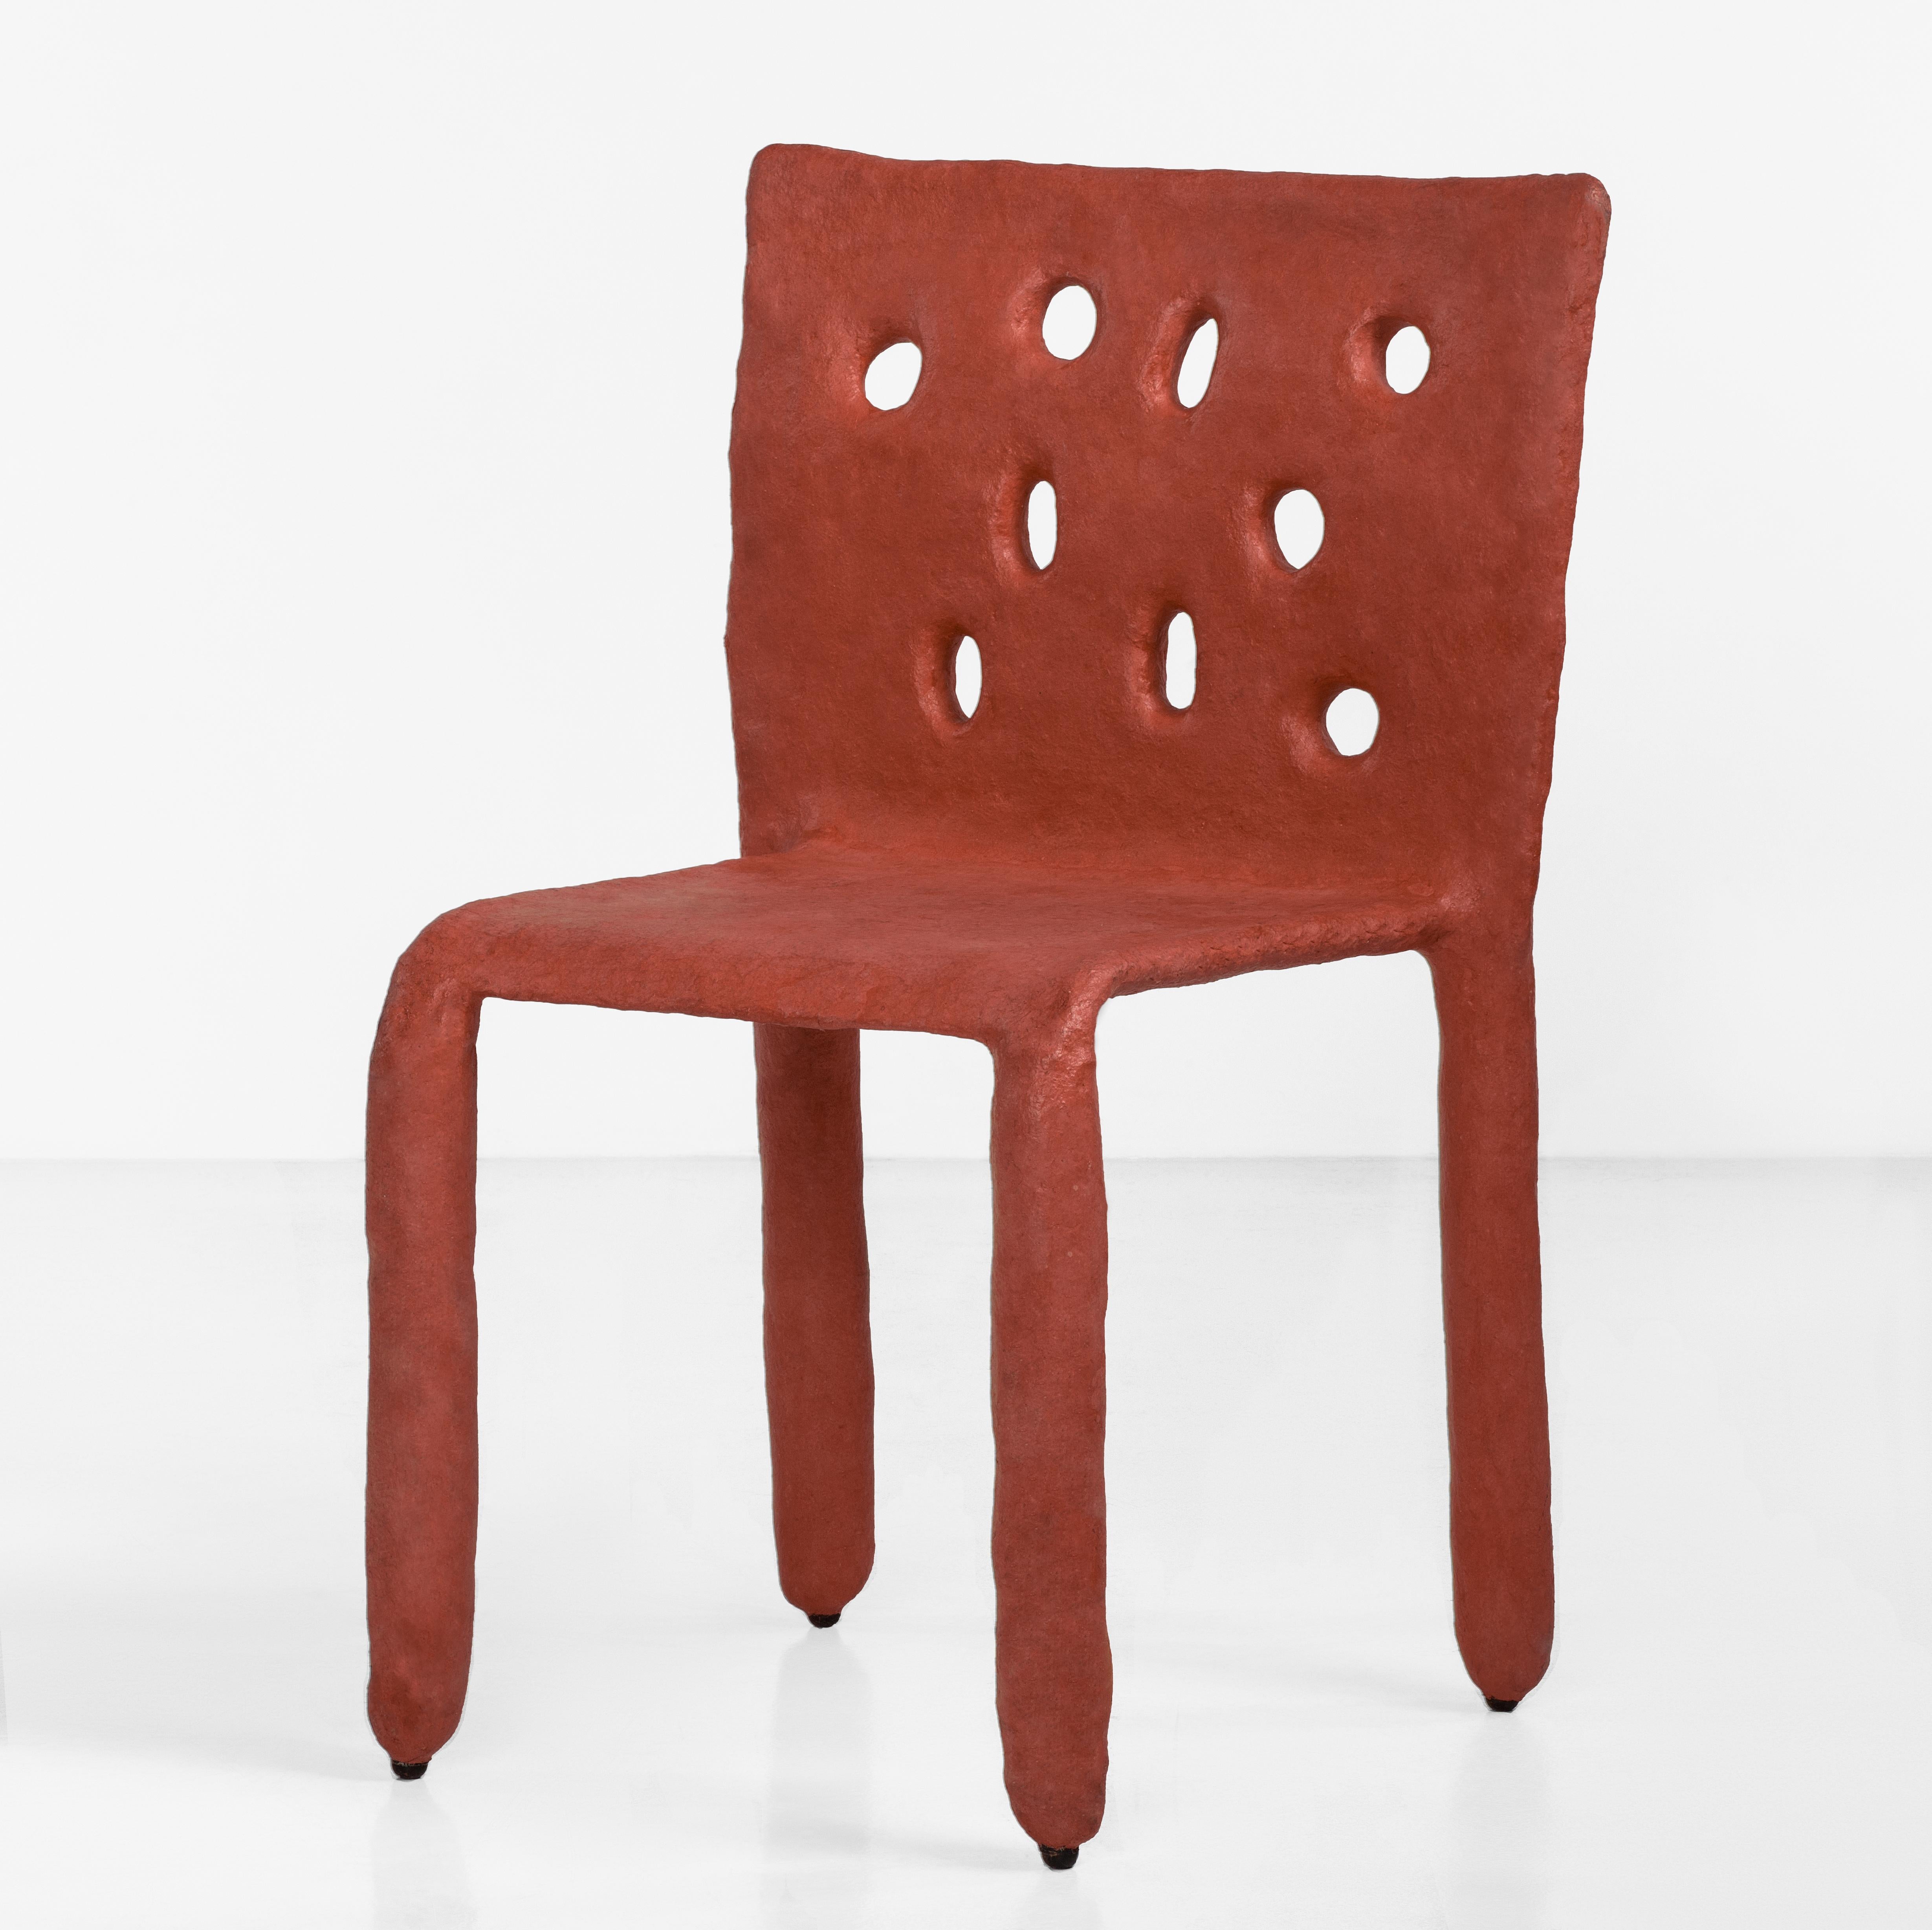 White Sculpted Contemporary Chair by FAINA 2